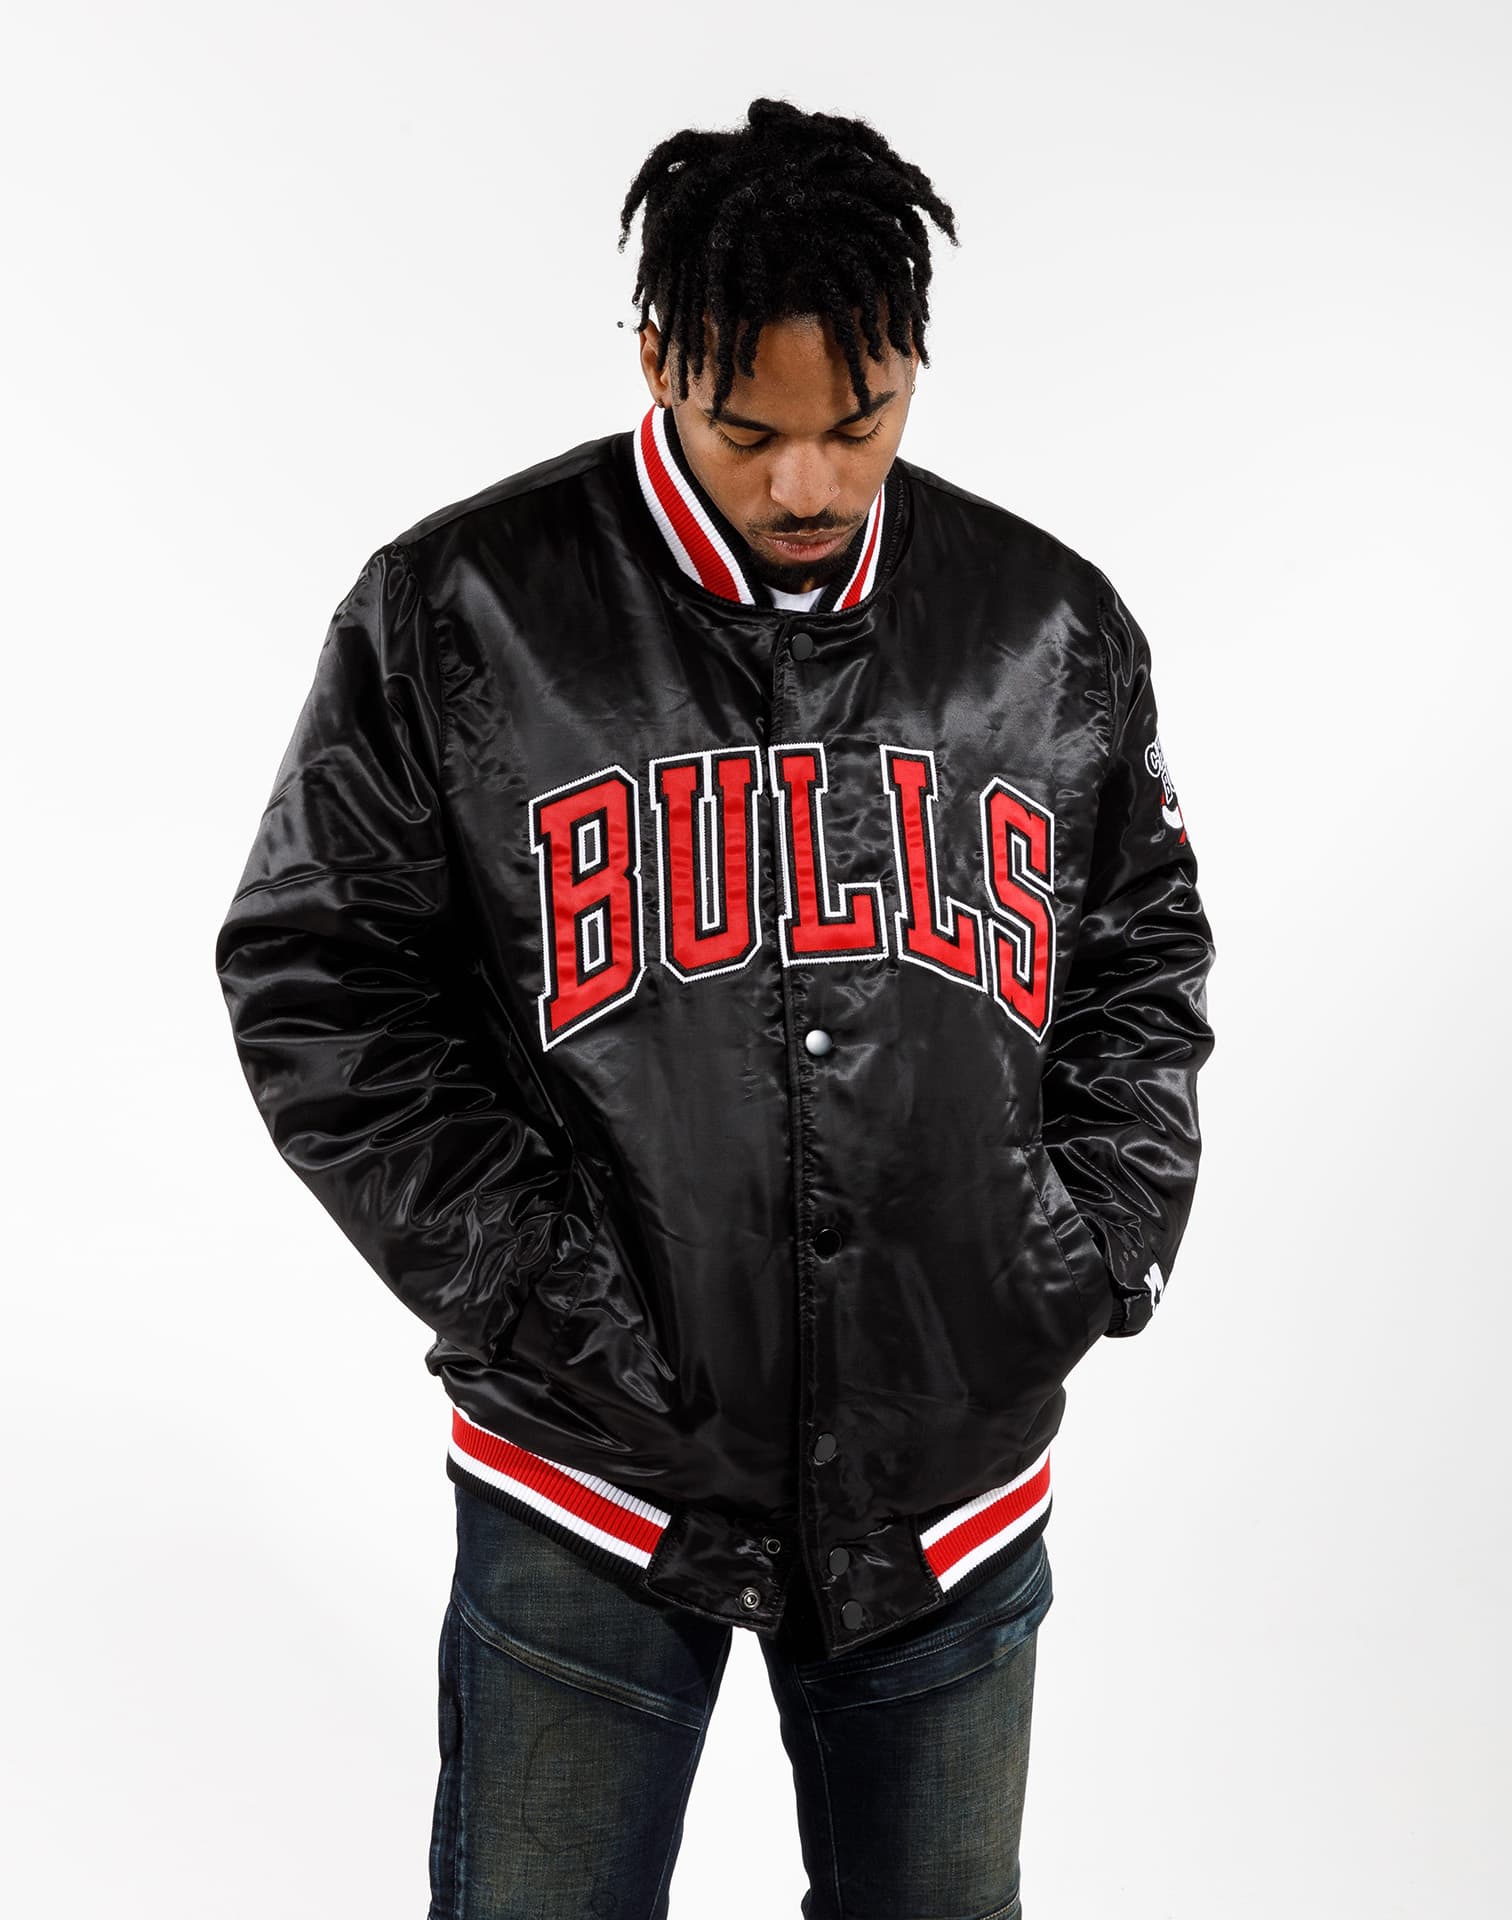 chicago bulls college jacket